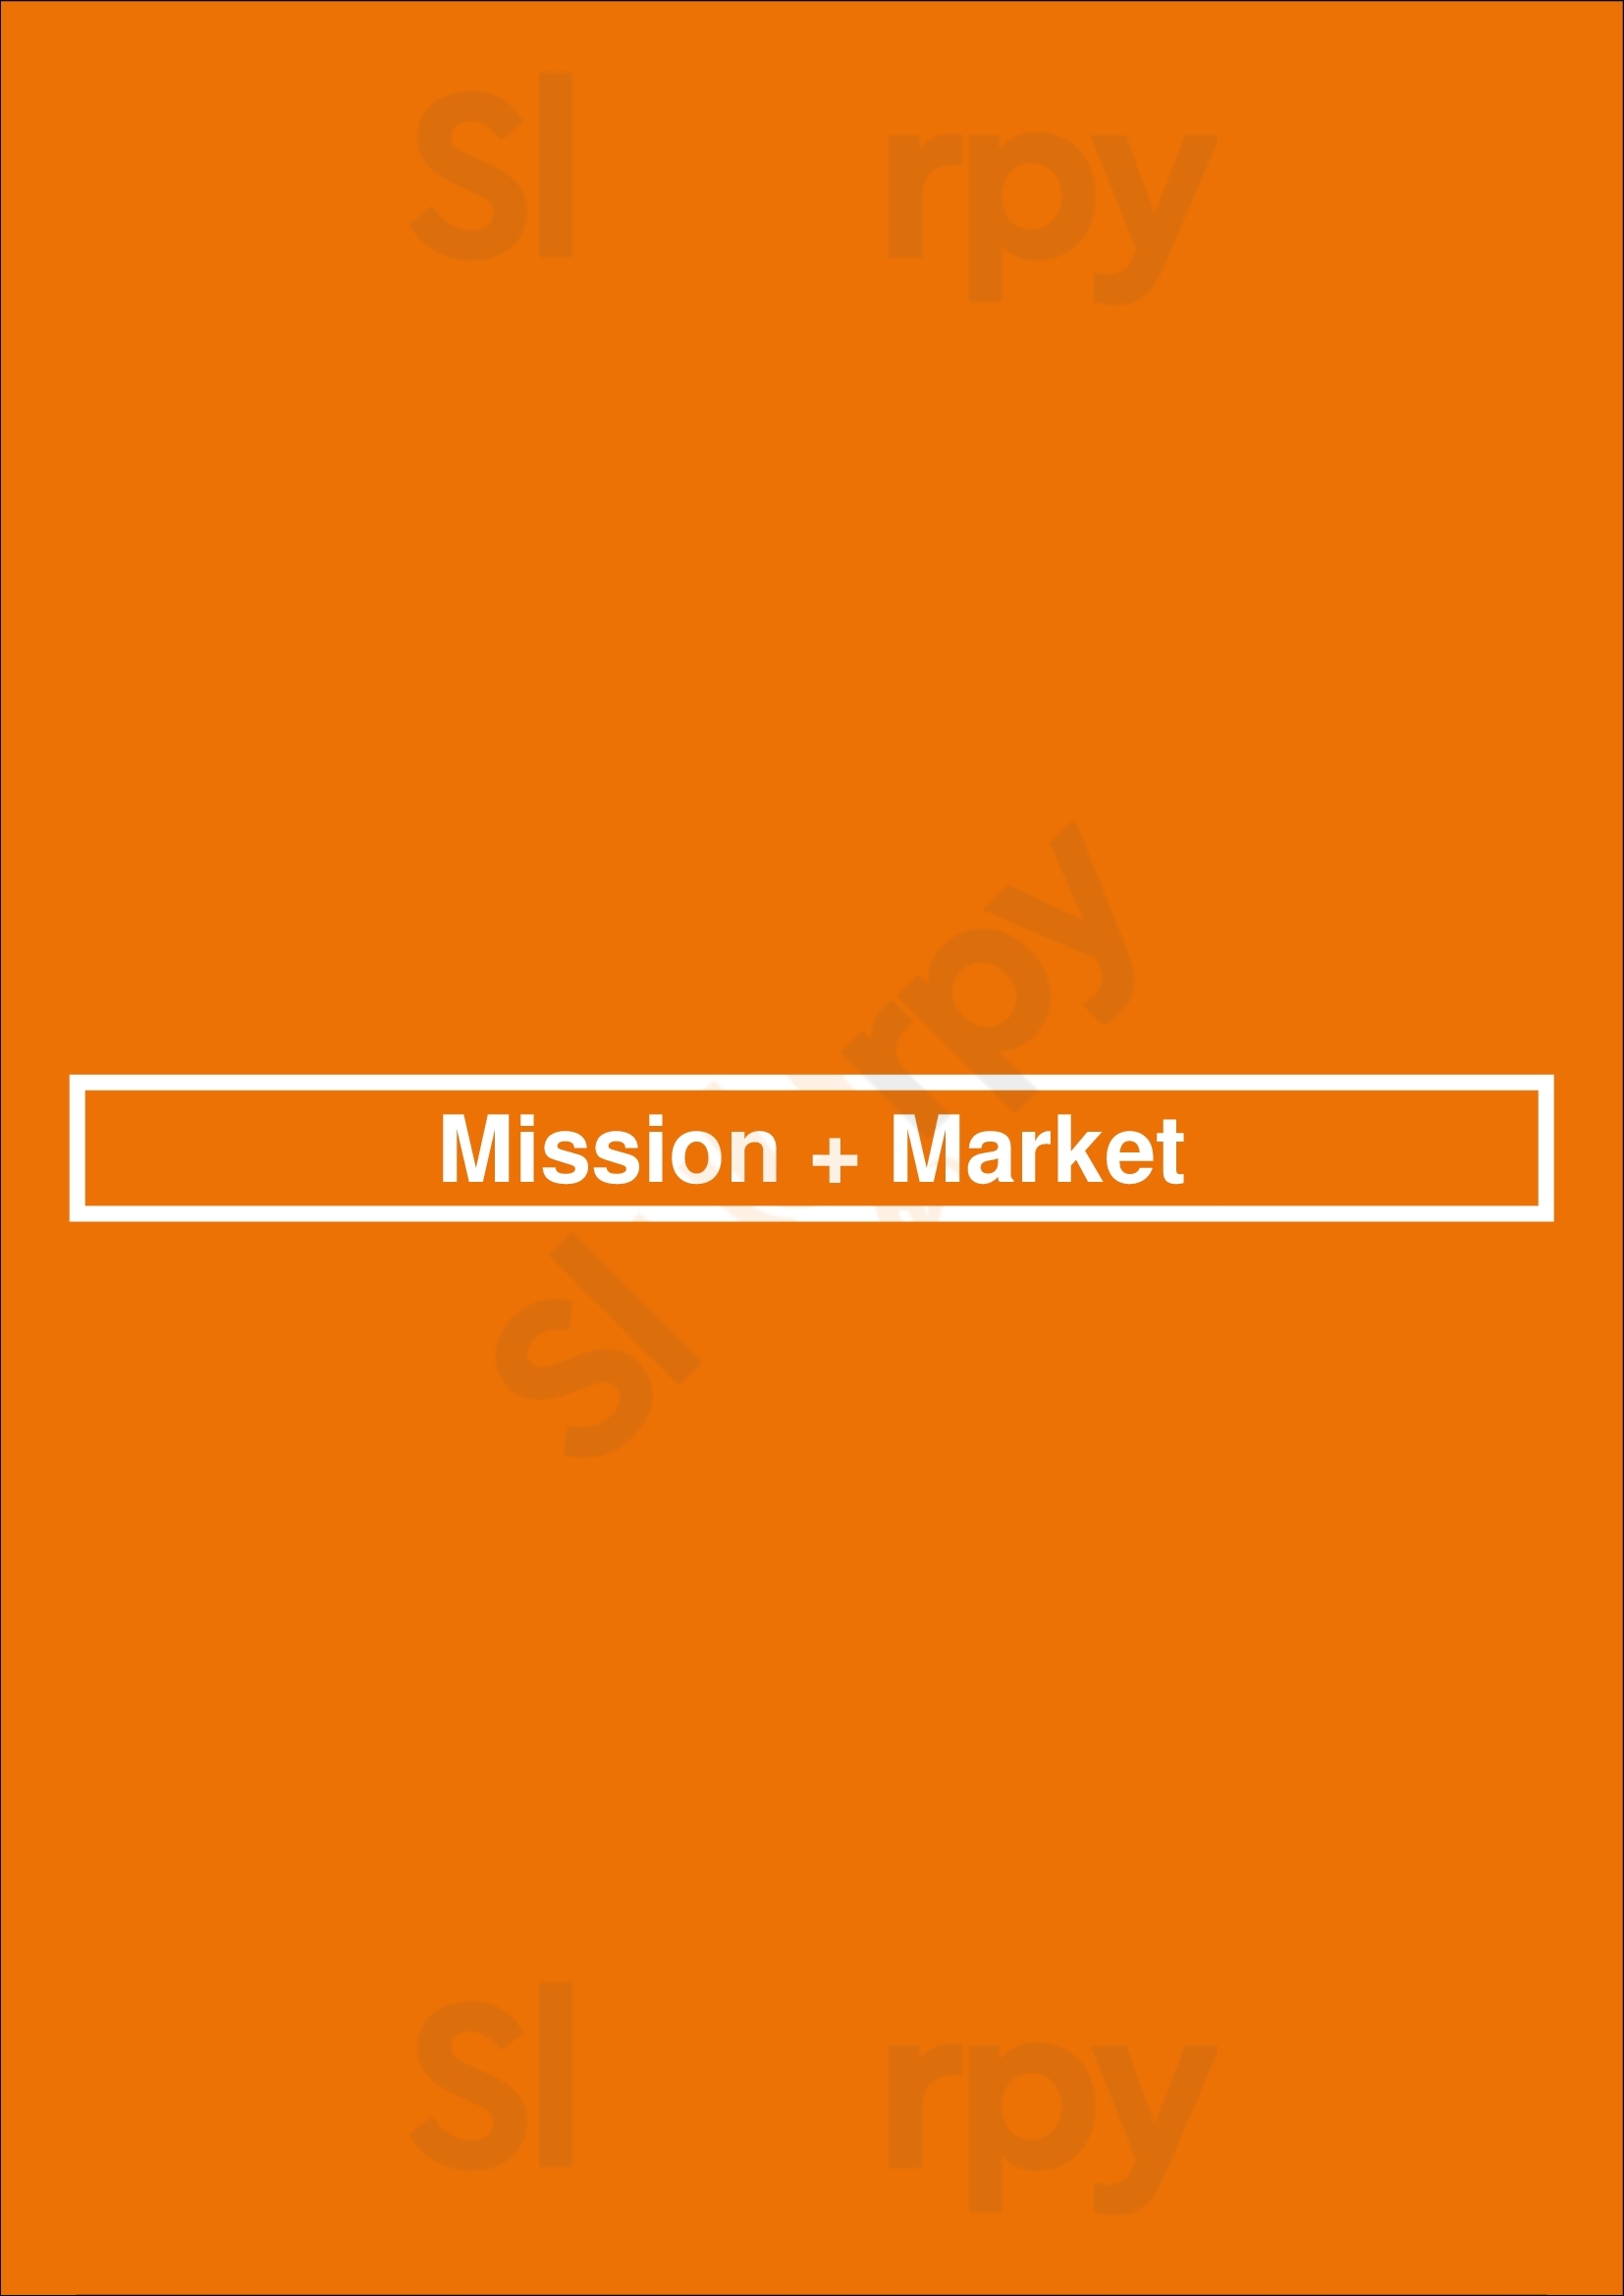 Mission + Market Atlanta Menu - 1